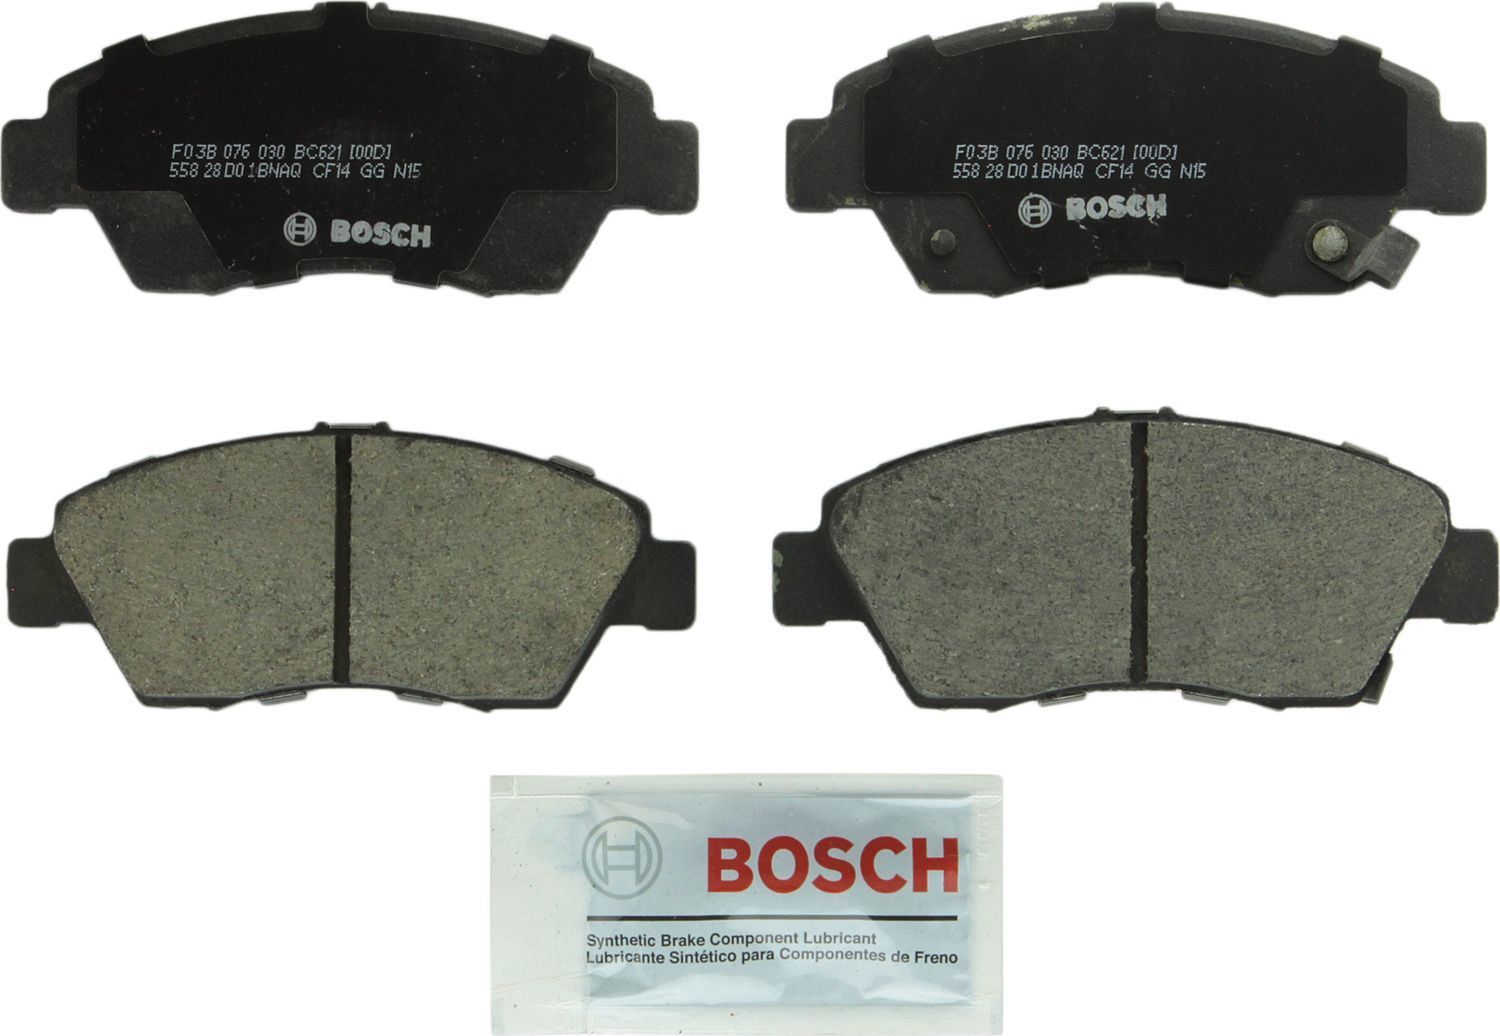 BOSCH BRAKE - Bosch QuietCast Brake Pad Ceramic Brake Pads (Front) - BQC BC621